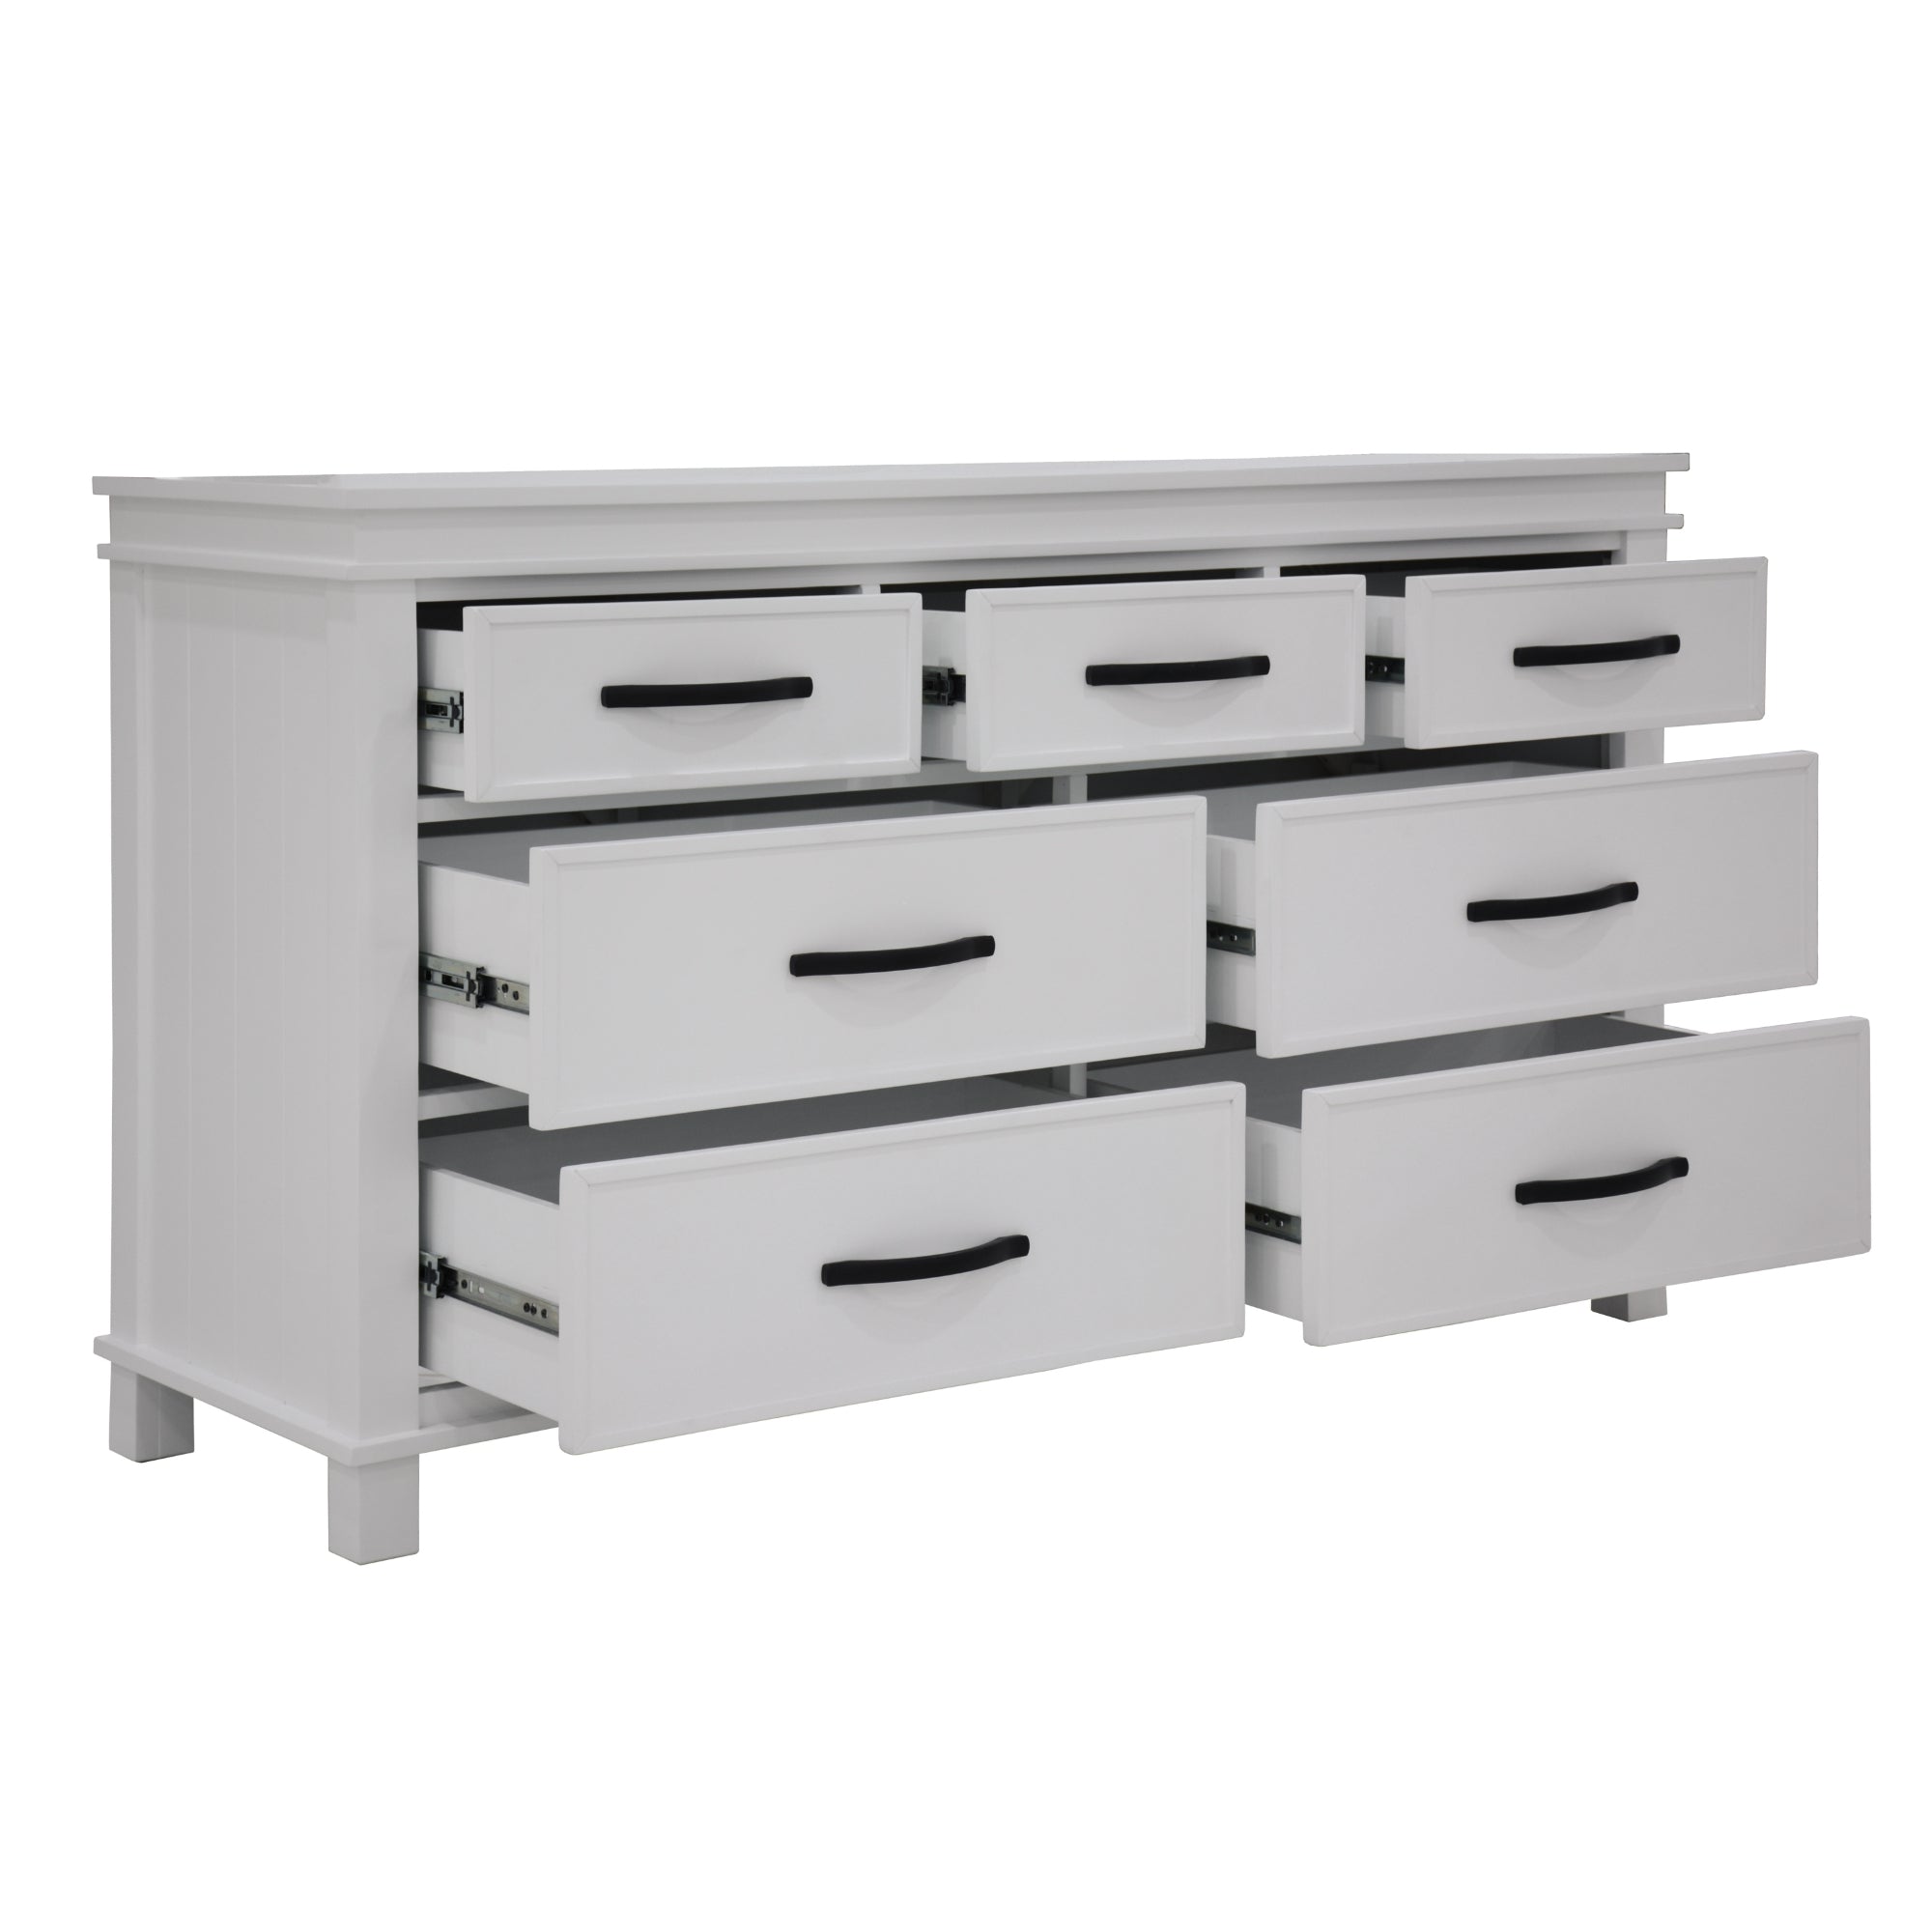 Solid Wood 7-Drawer Dresser with Metal Handles, Tallboy Storage - White